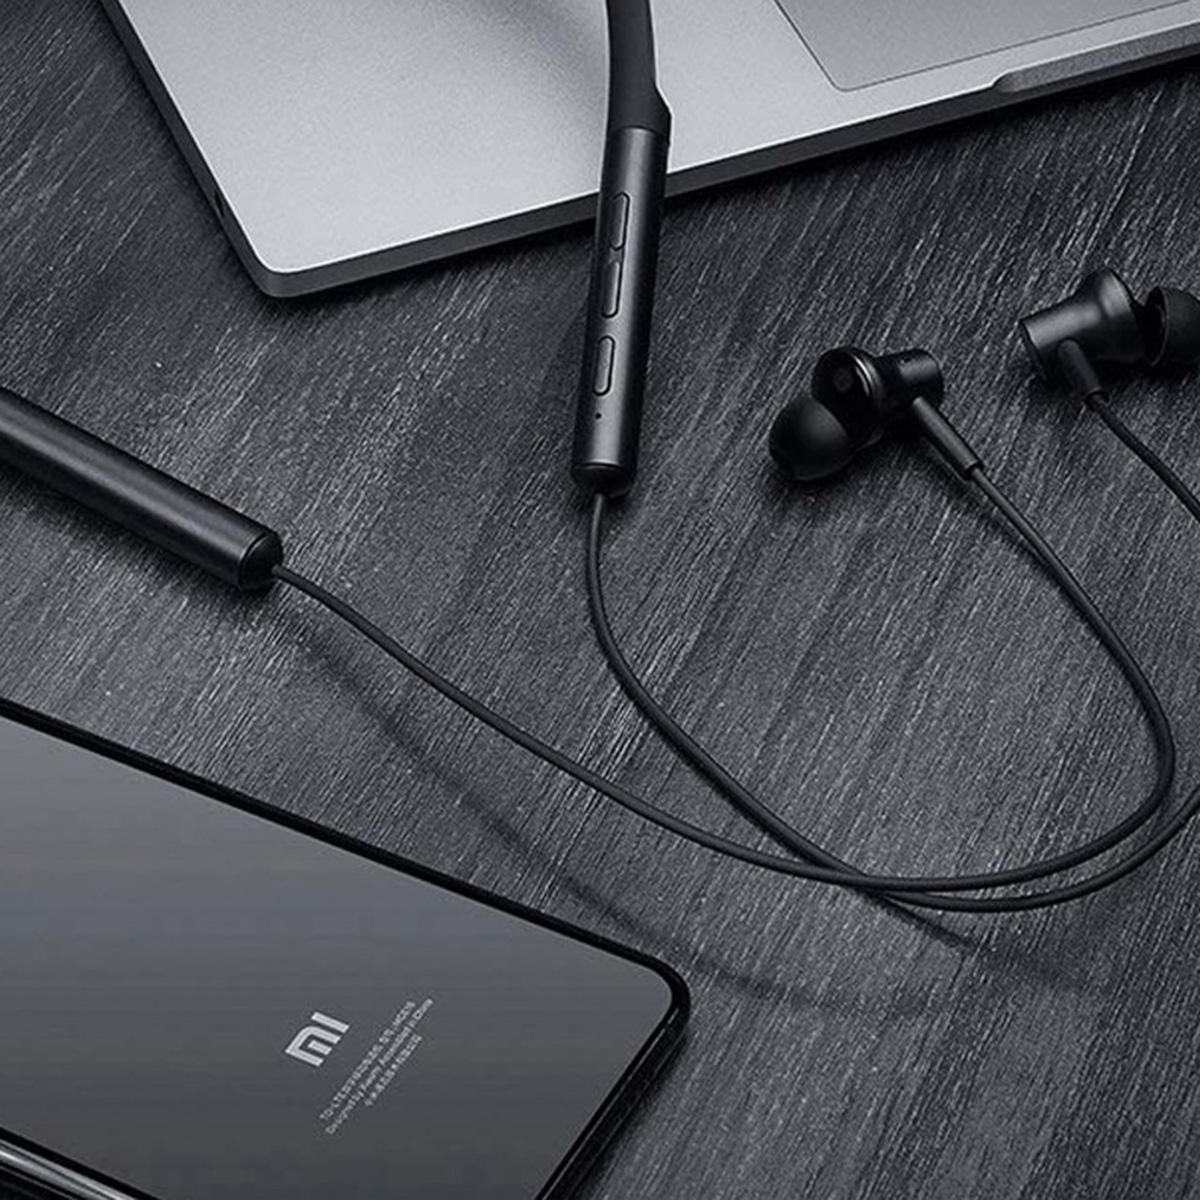 Original Xiaomi Wireless bluetooth Collar Headphones Stereo Sports Neckband Earphone with Mic COD